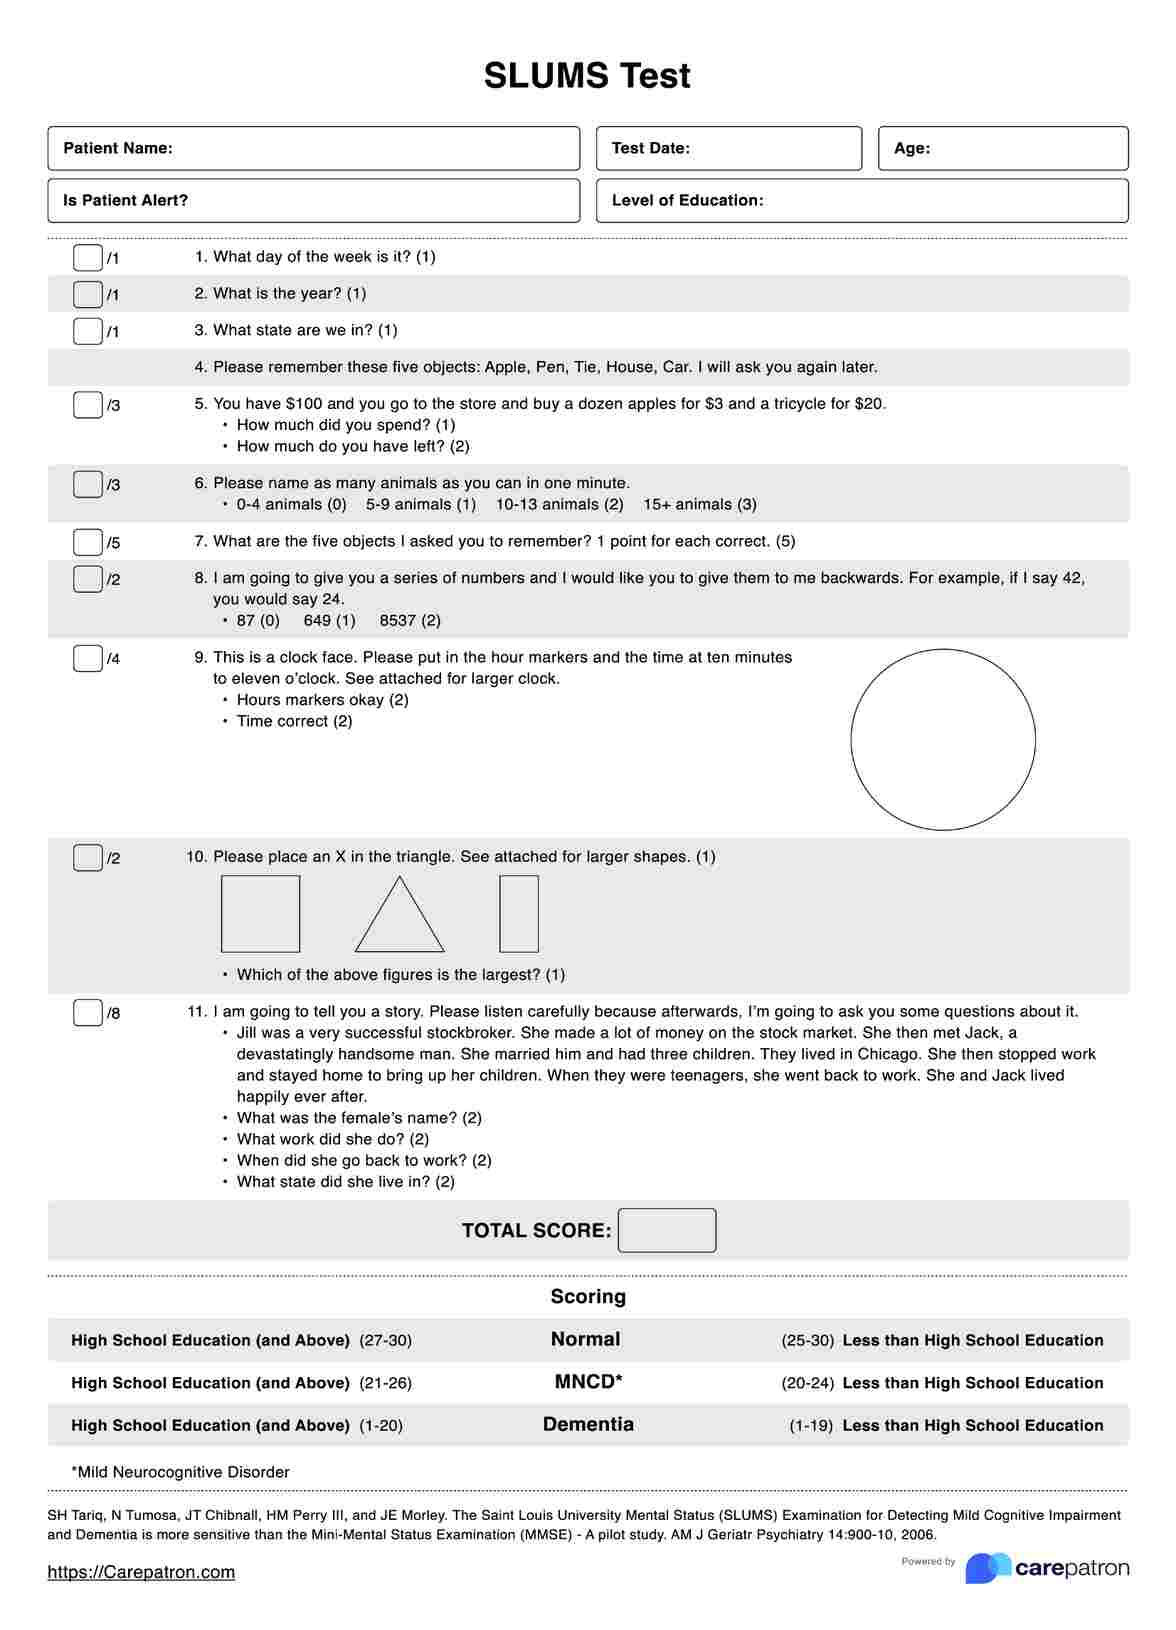 SLUMS Test PDF Example